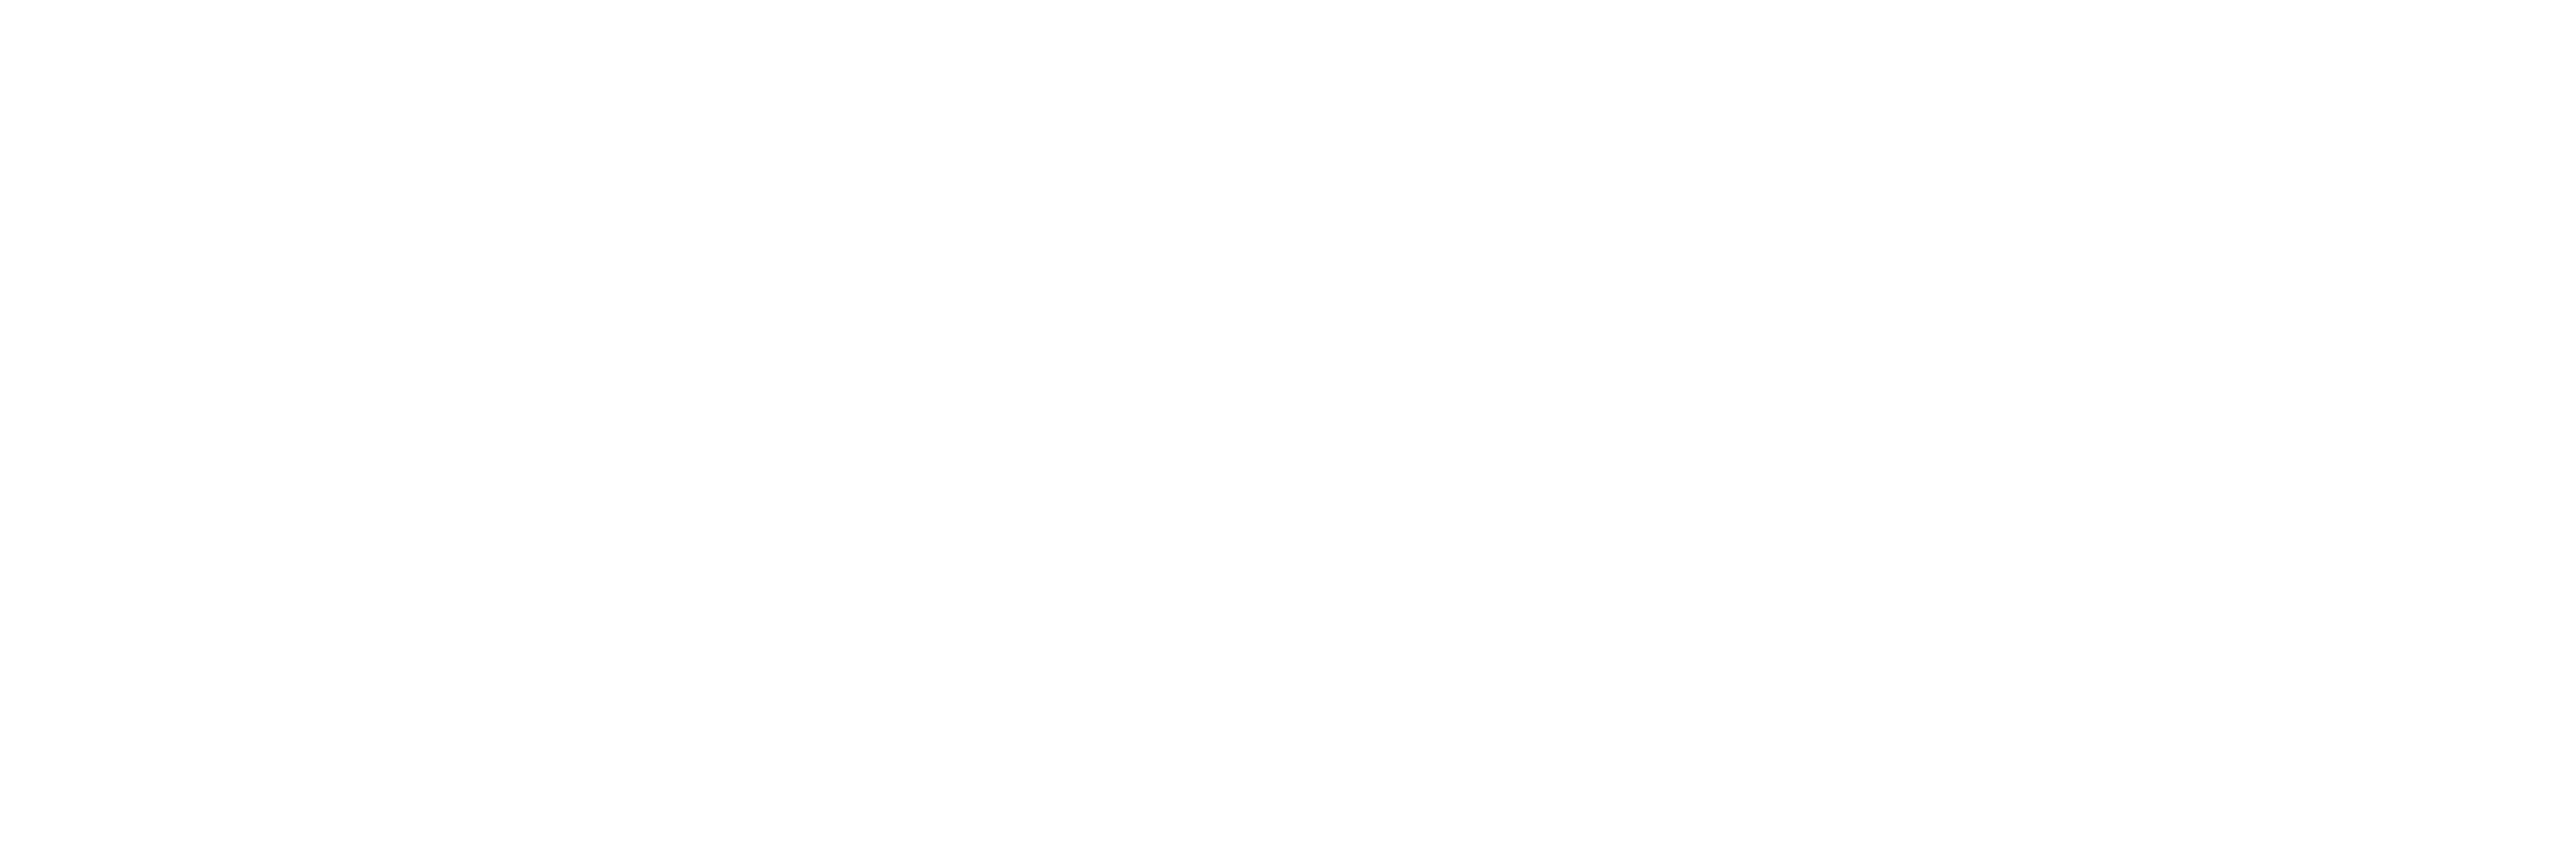 Dealership Logo - Dealership News | Automotive News | Car Dealer News